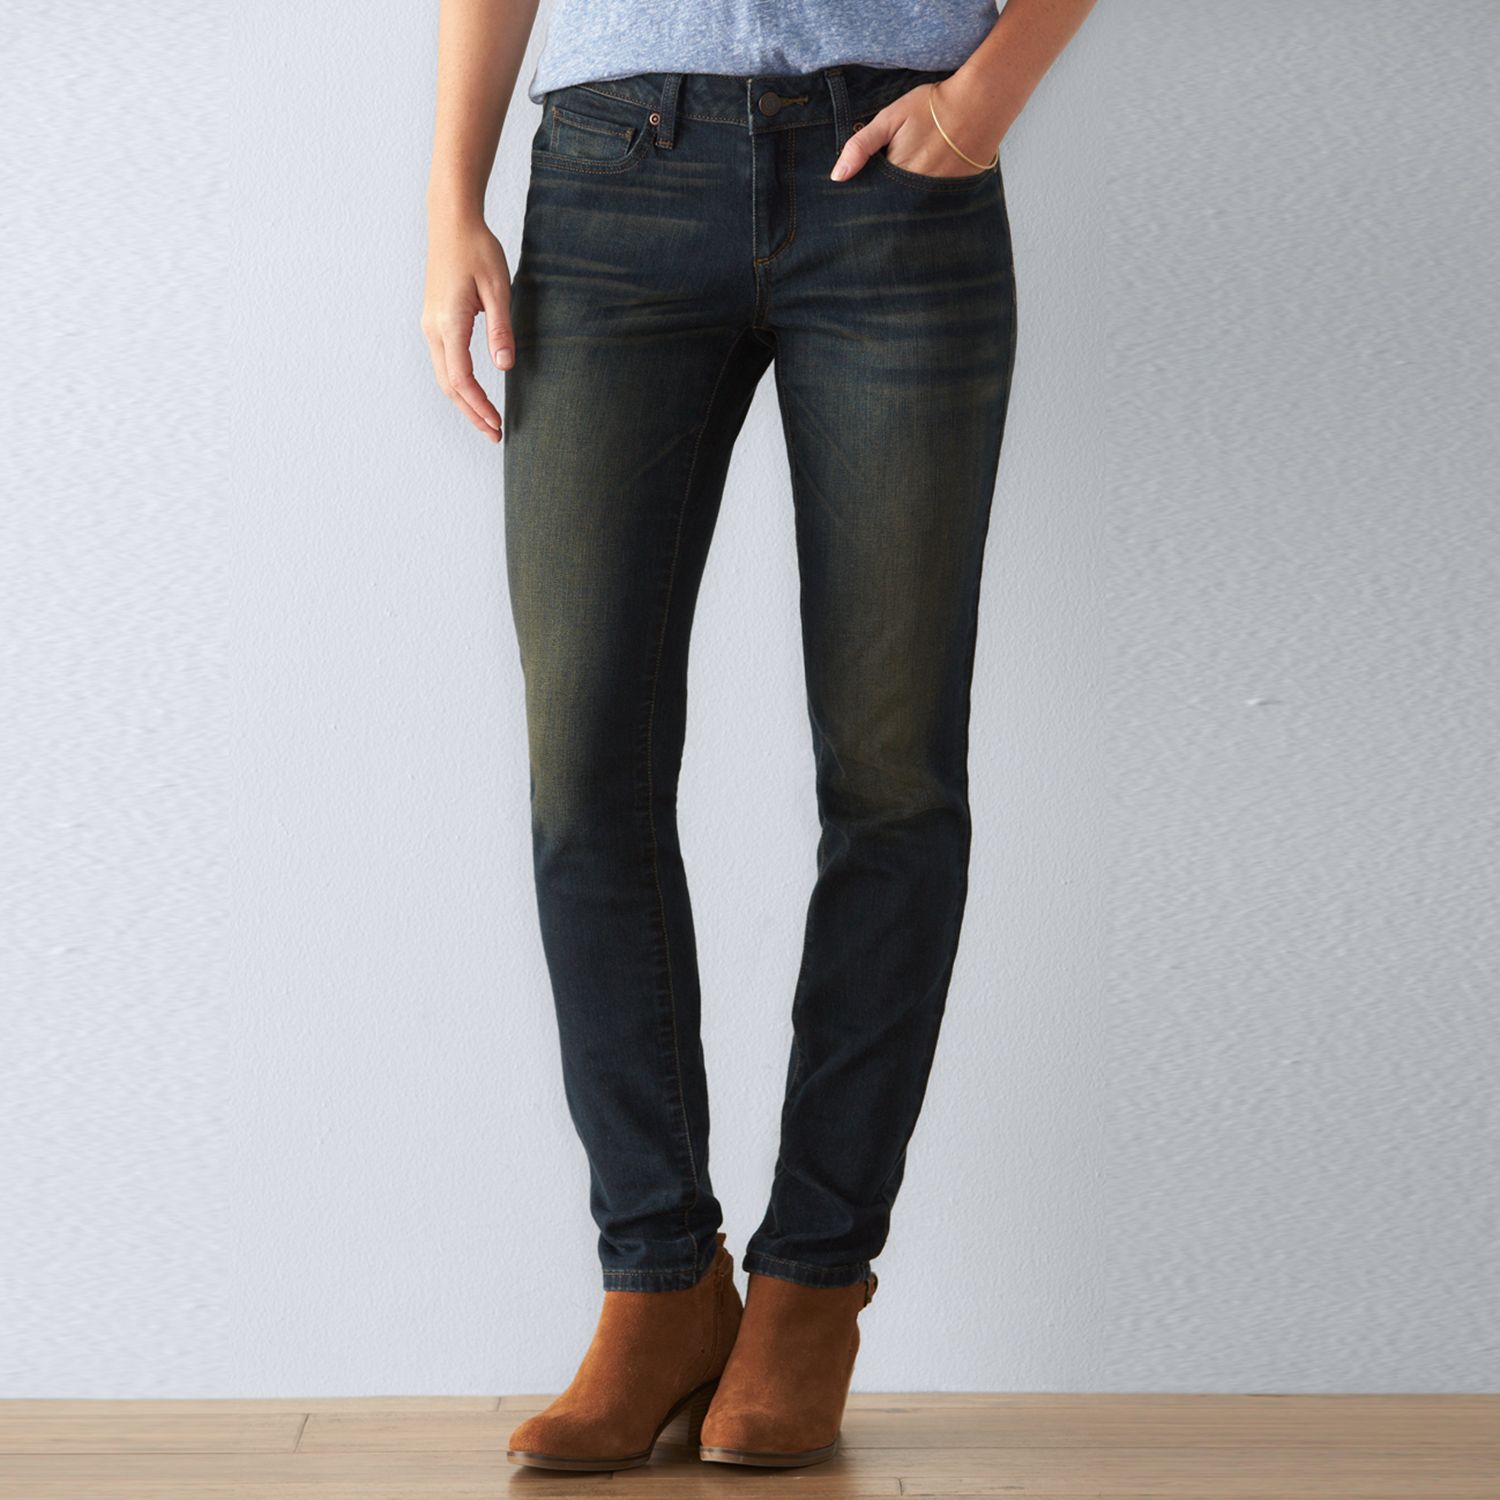 sonoma goods for life skinny jeans